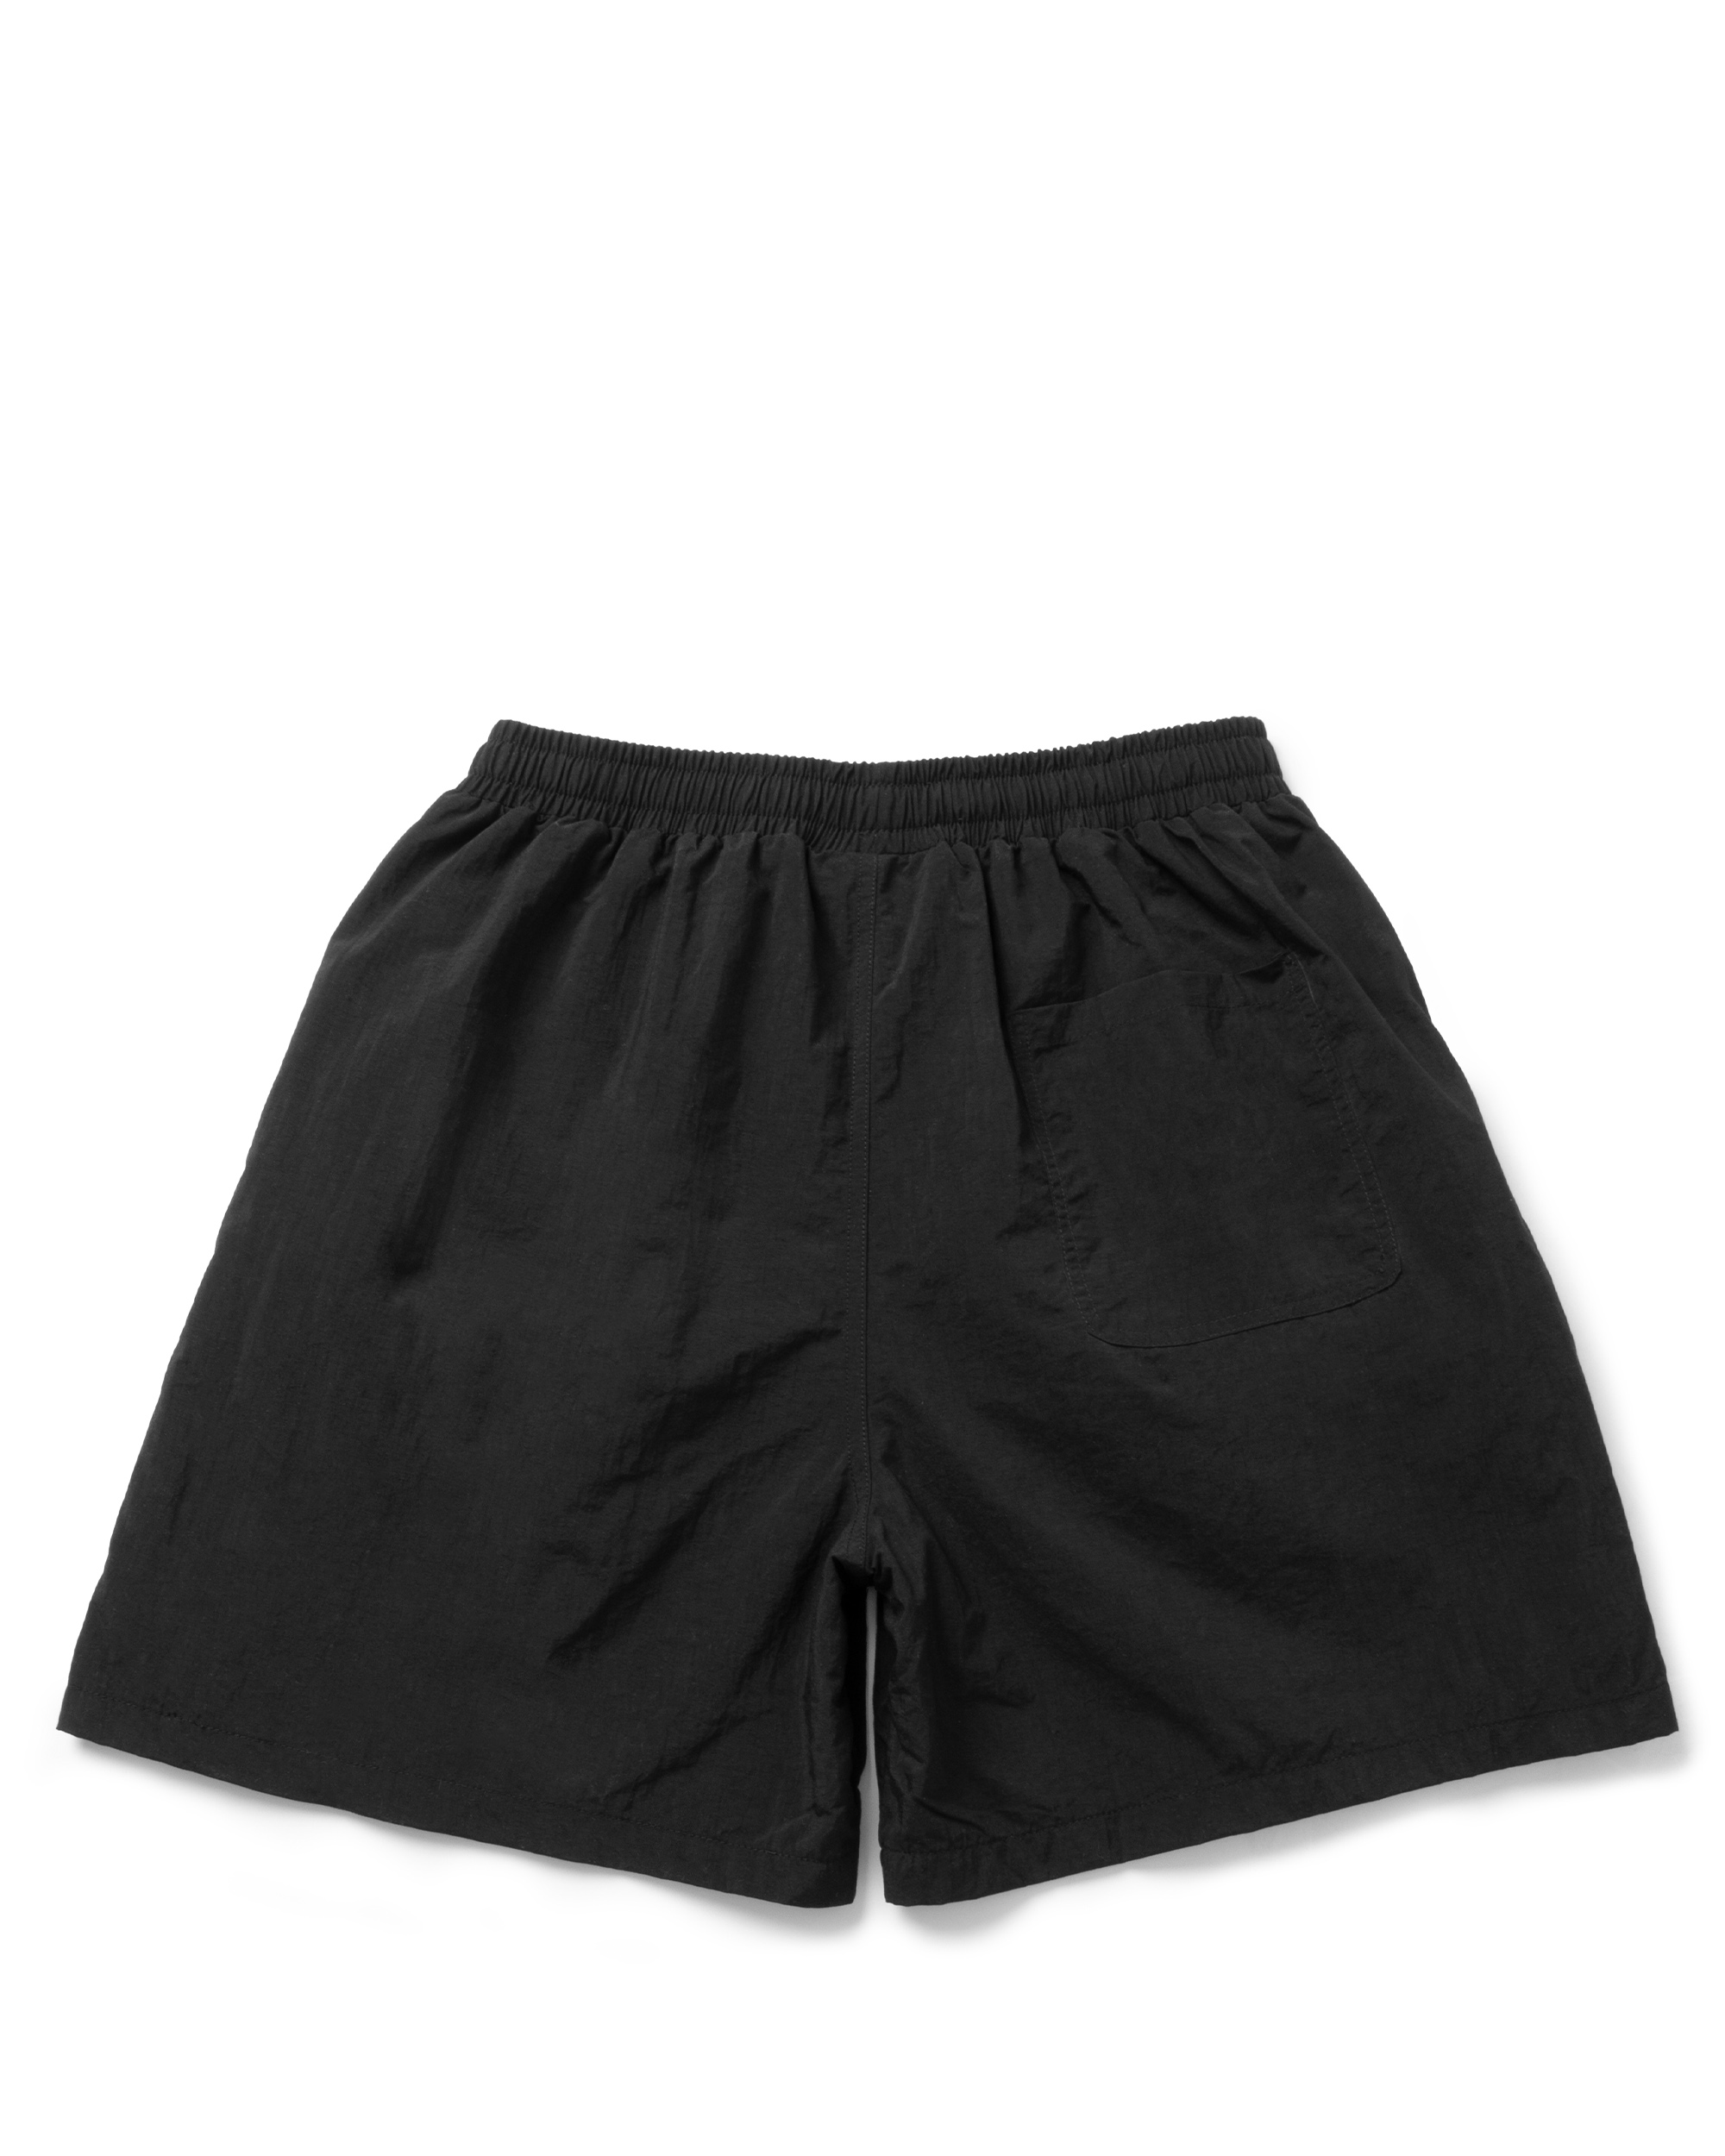 Dico Star Cargo Shorts - Black